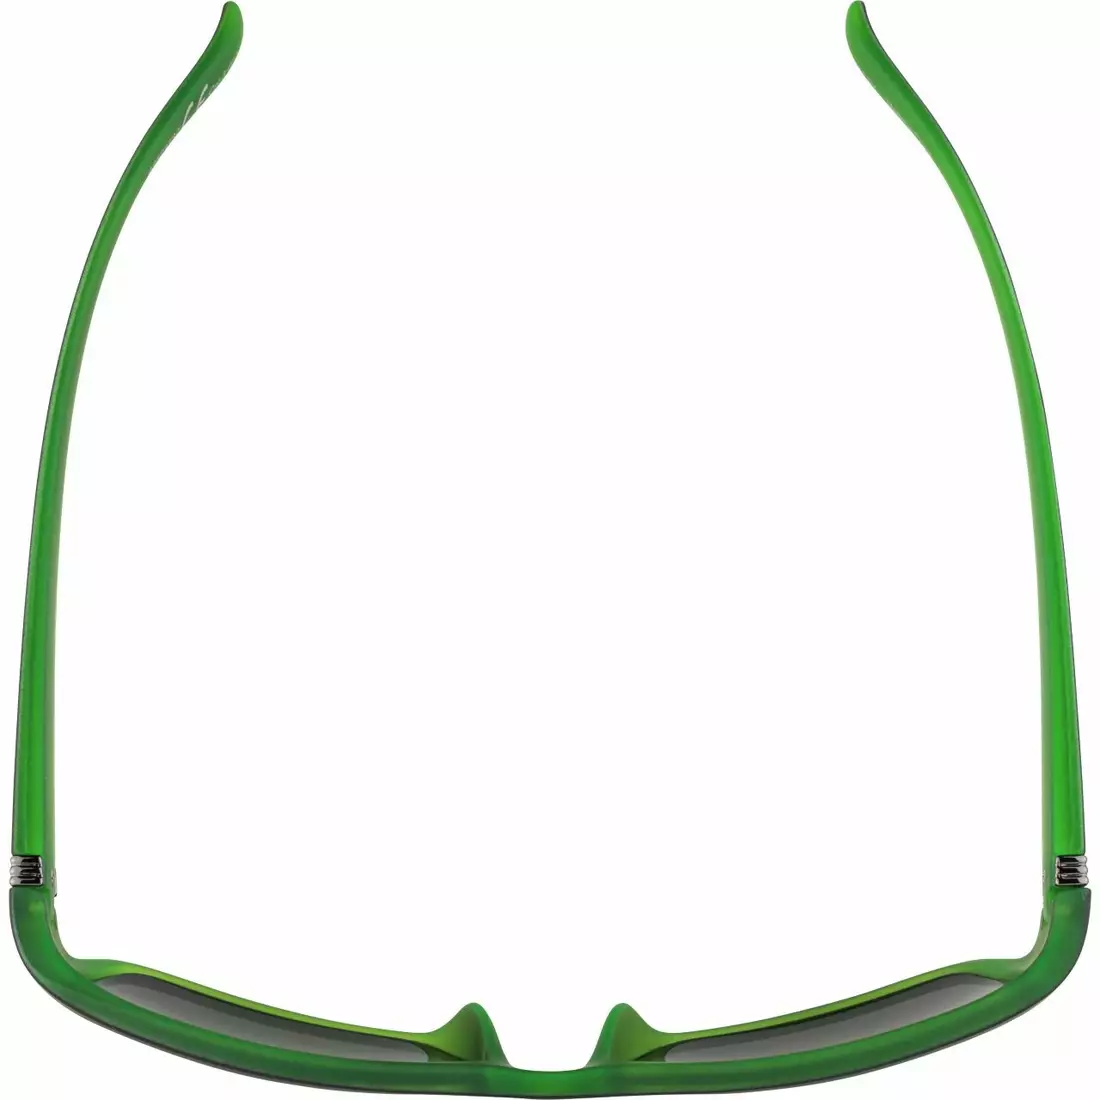 ALPINA okulary sportowe kacey black matt-green A8523332